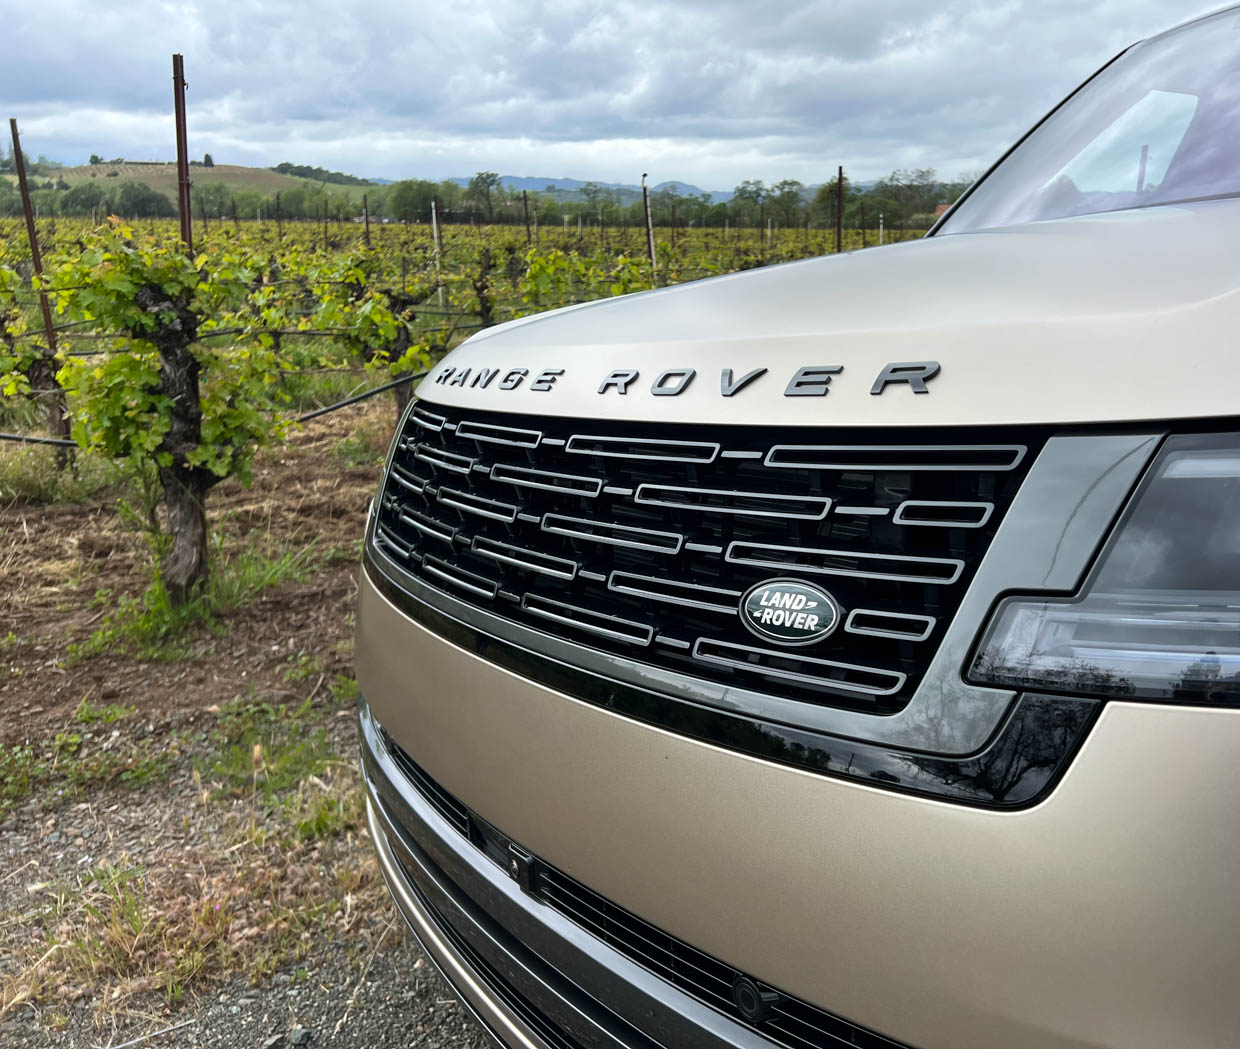 Driven: 2022 Range Rover